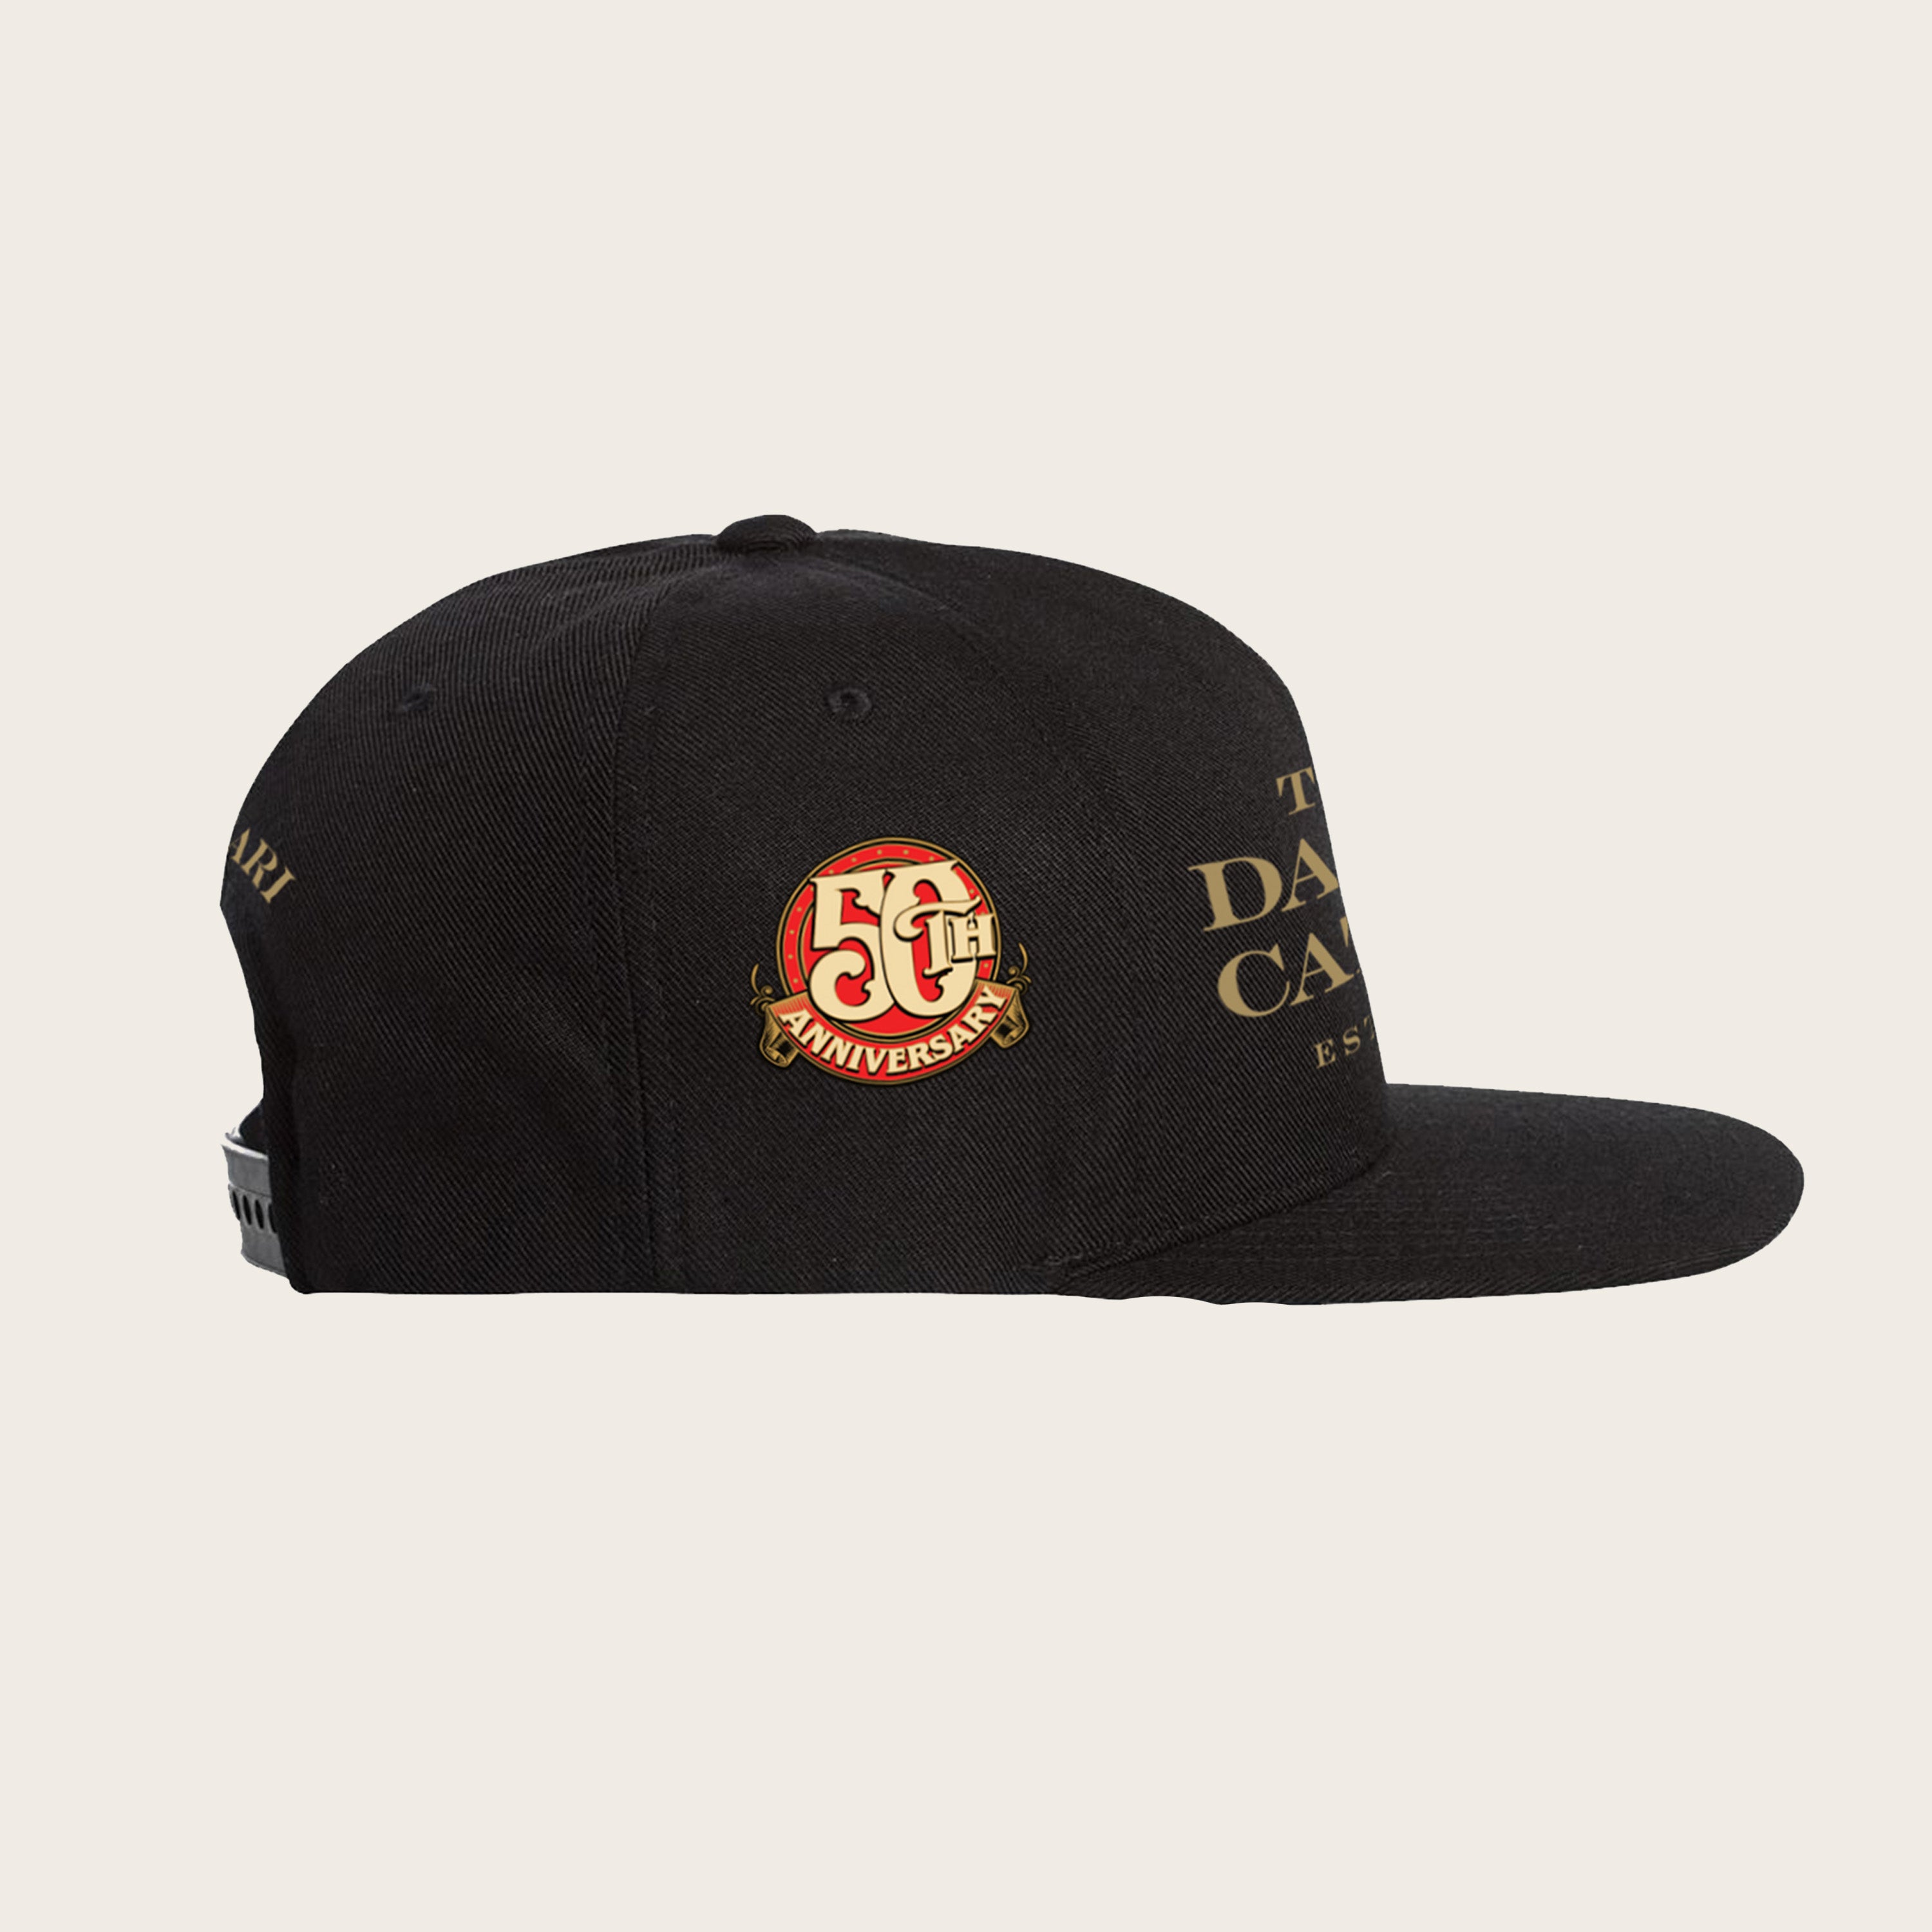 50th Anniversary Hat